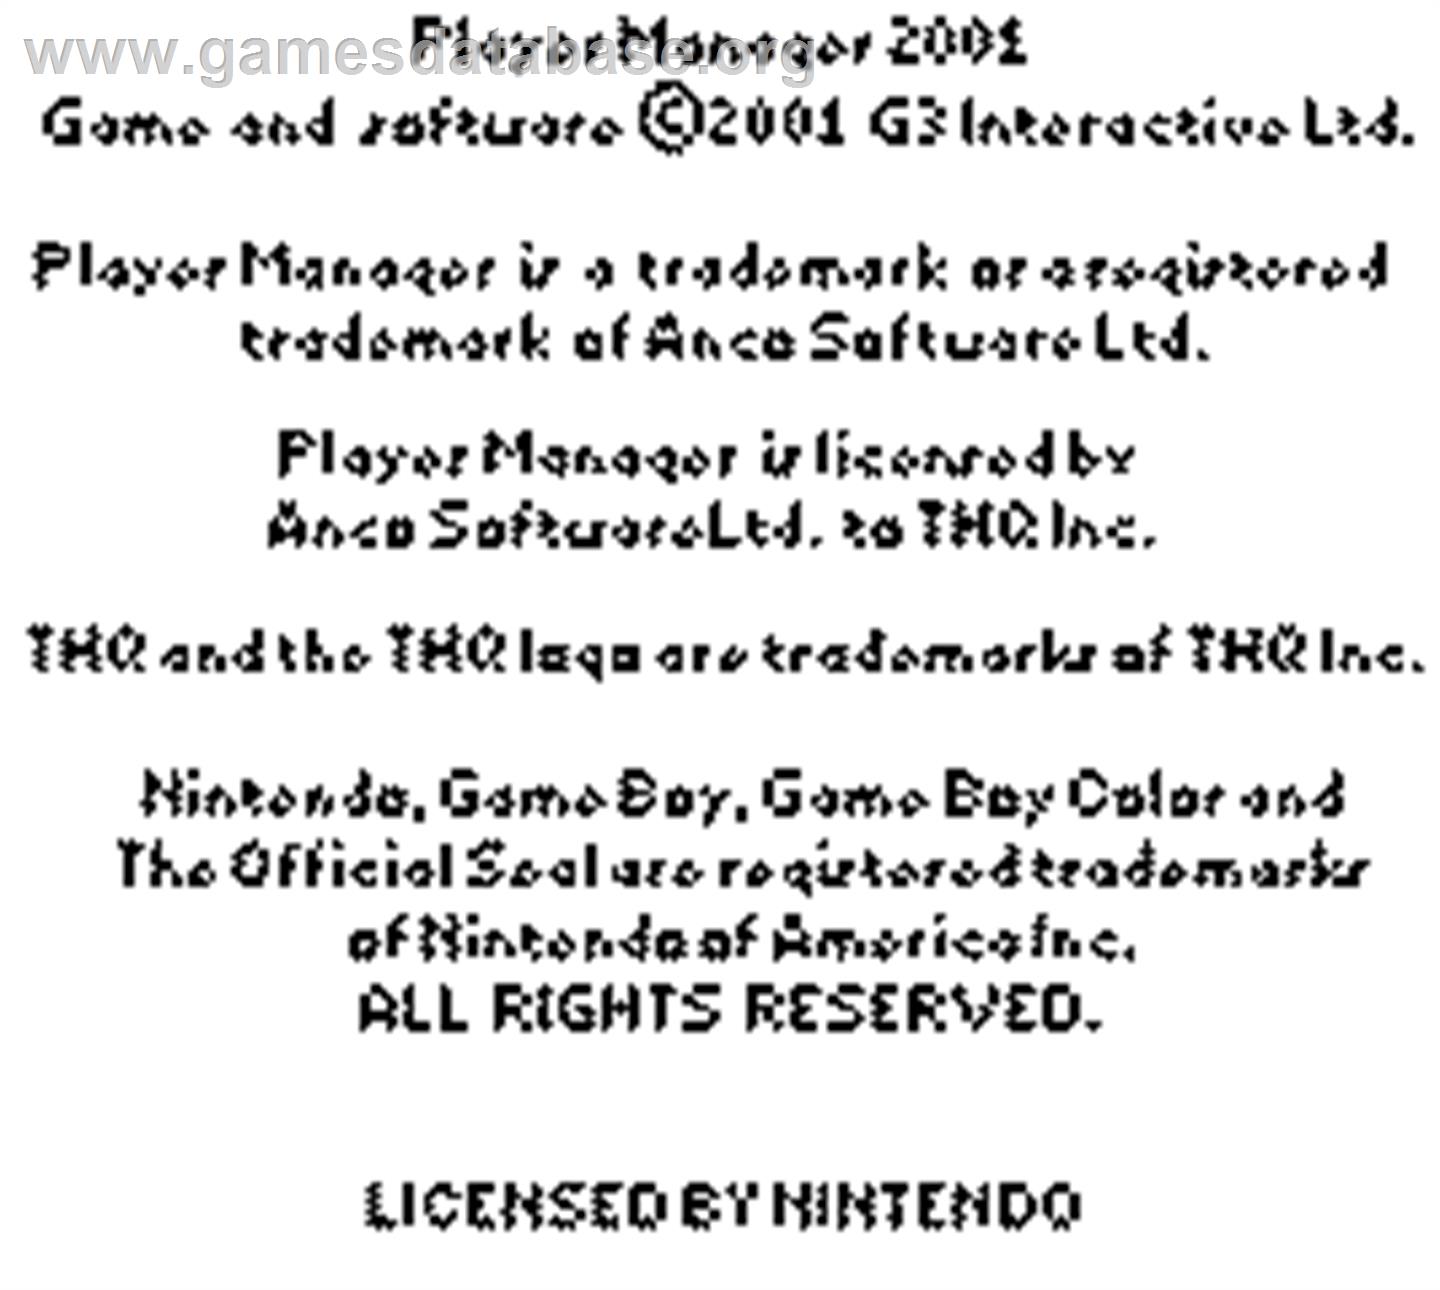 Player Manager 2001 - Nintendo Game Boy Color - Artwork - Title Screen